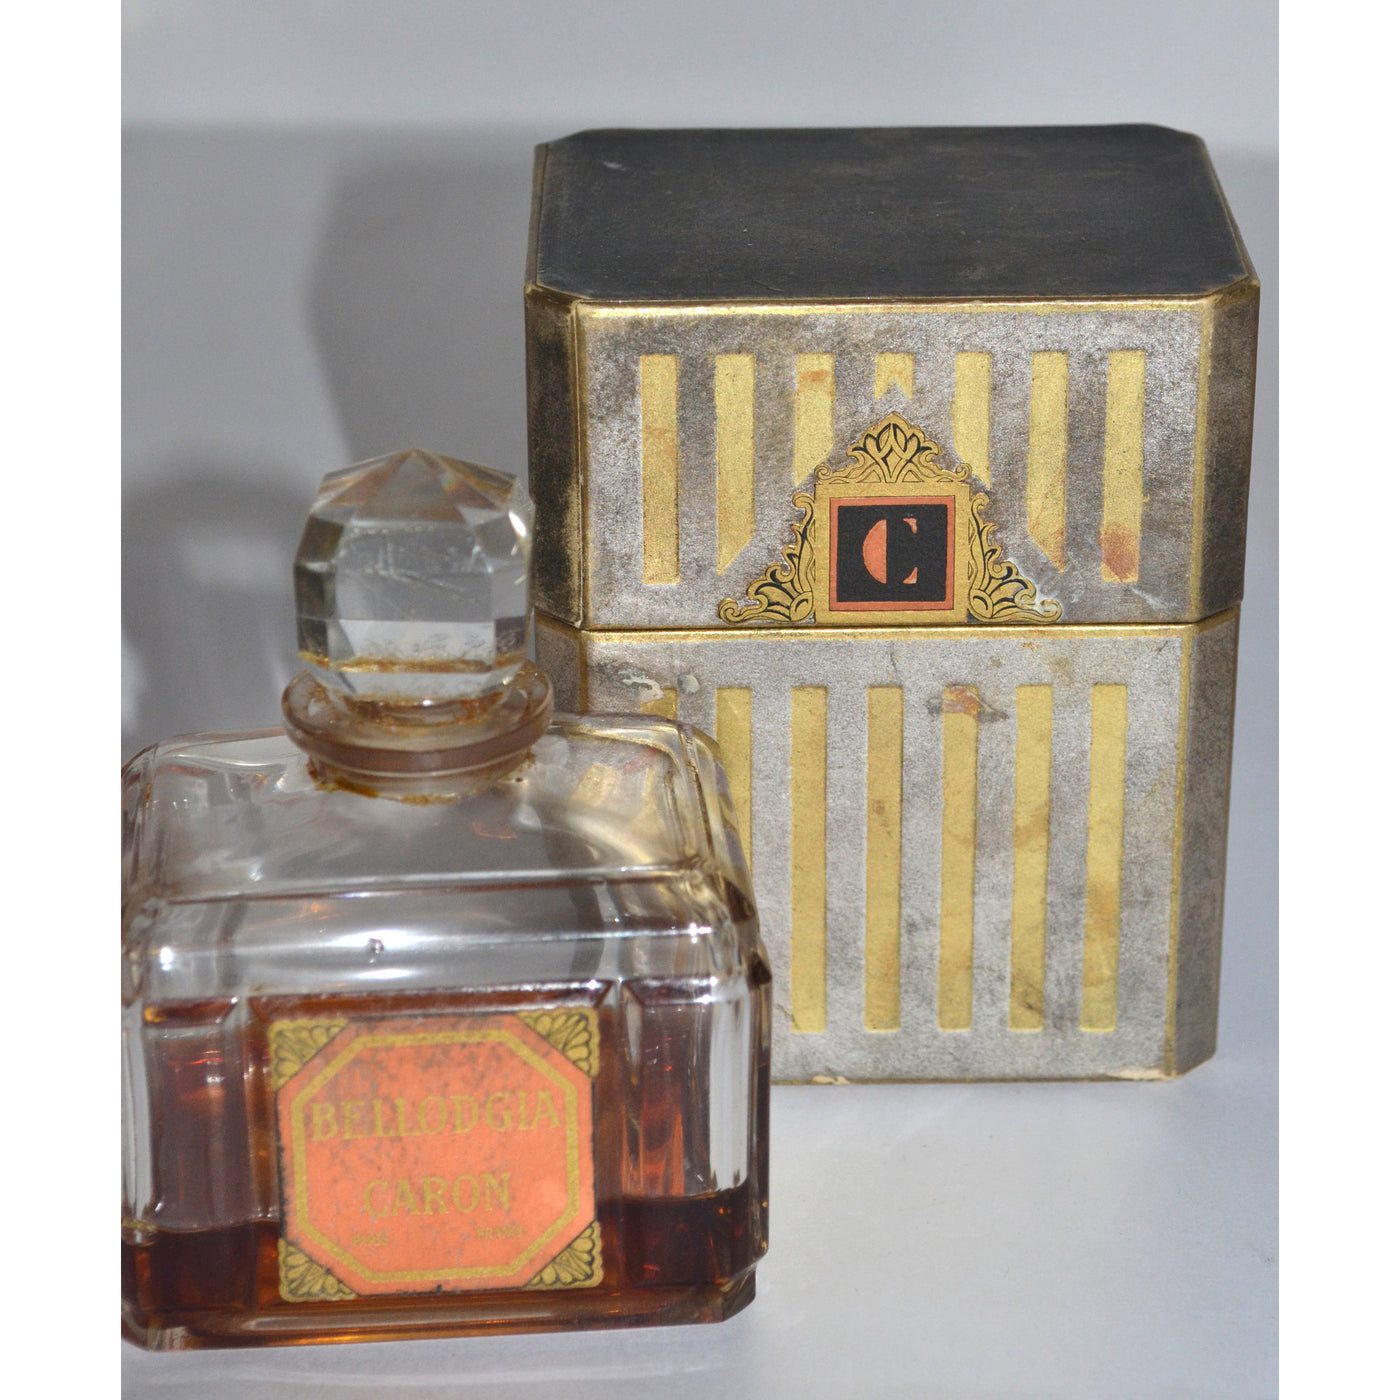 Vintage Bellodgia Baccarat Perfume Bottle By Caron